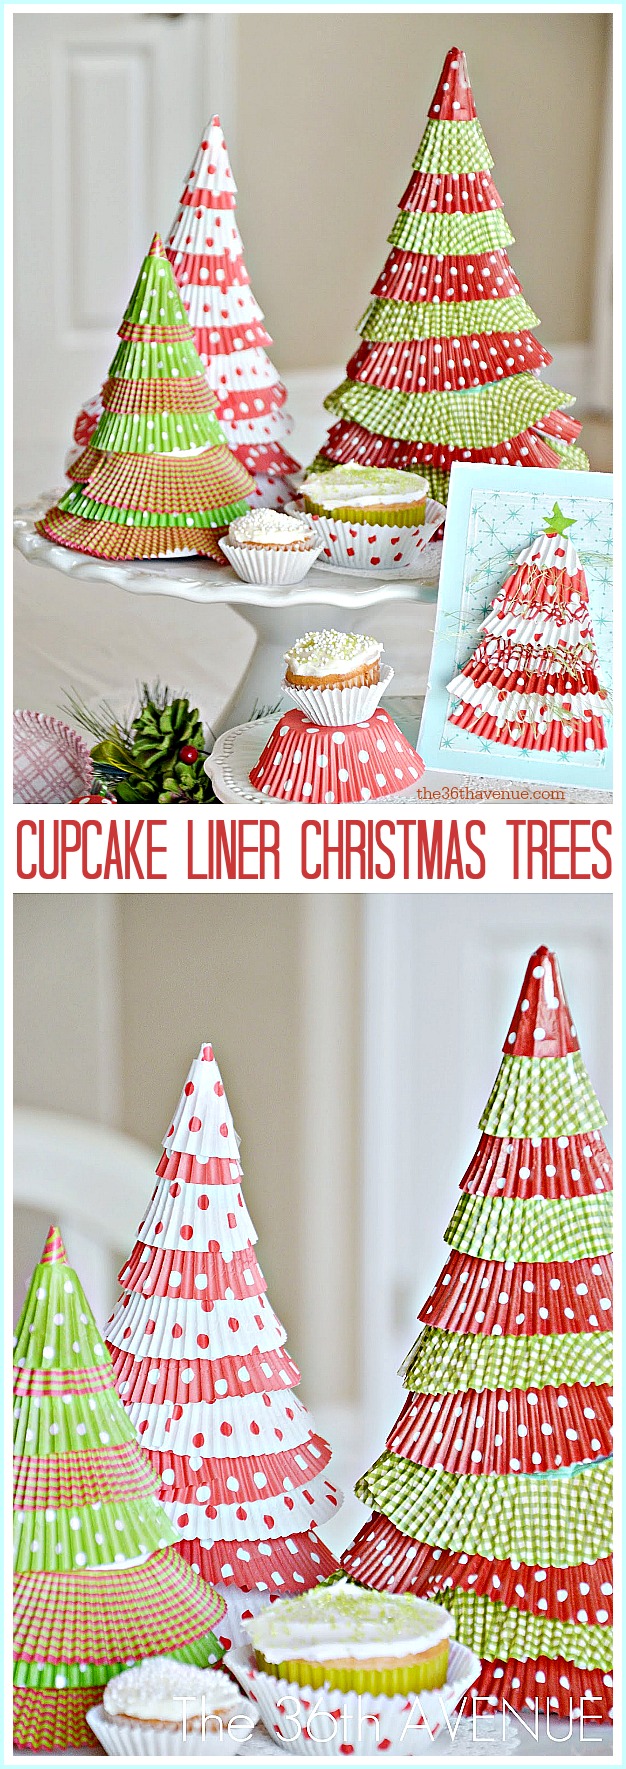 Cupcake-Liner-Christmas-Trees-the36thavenue.com_